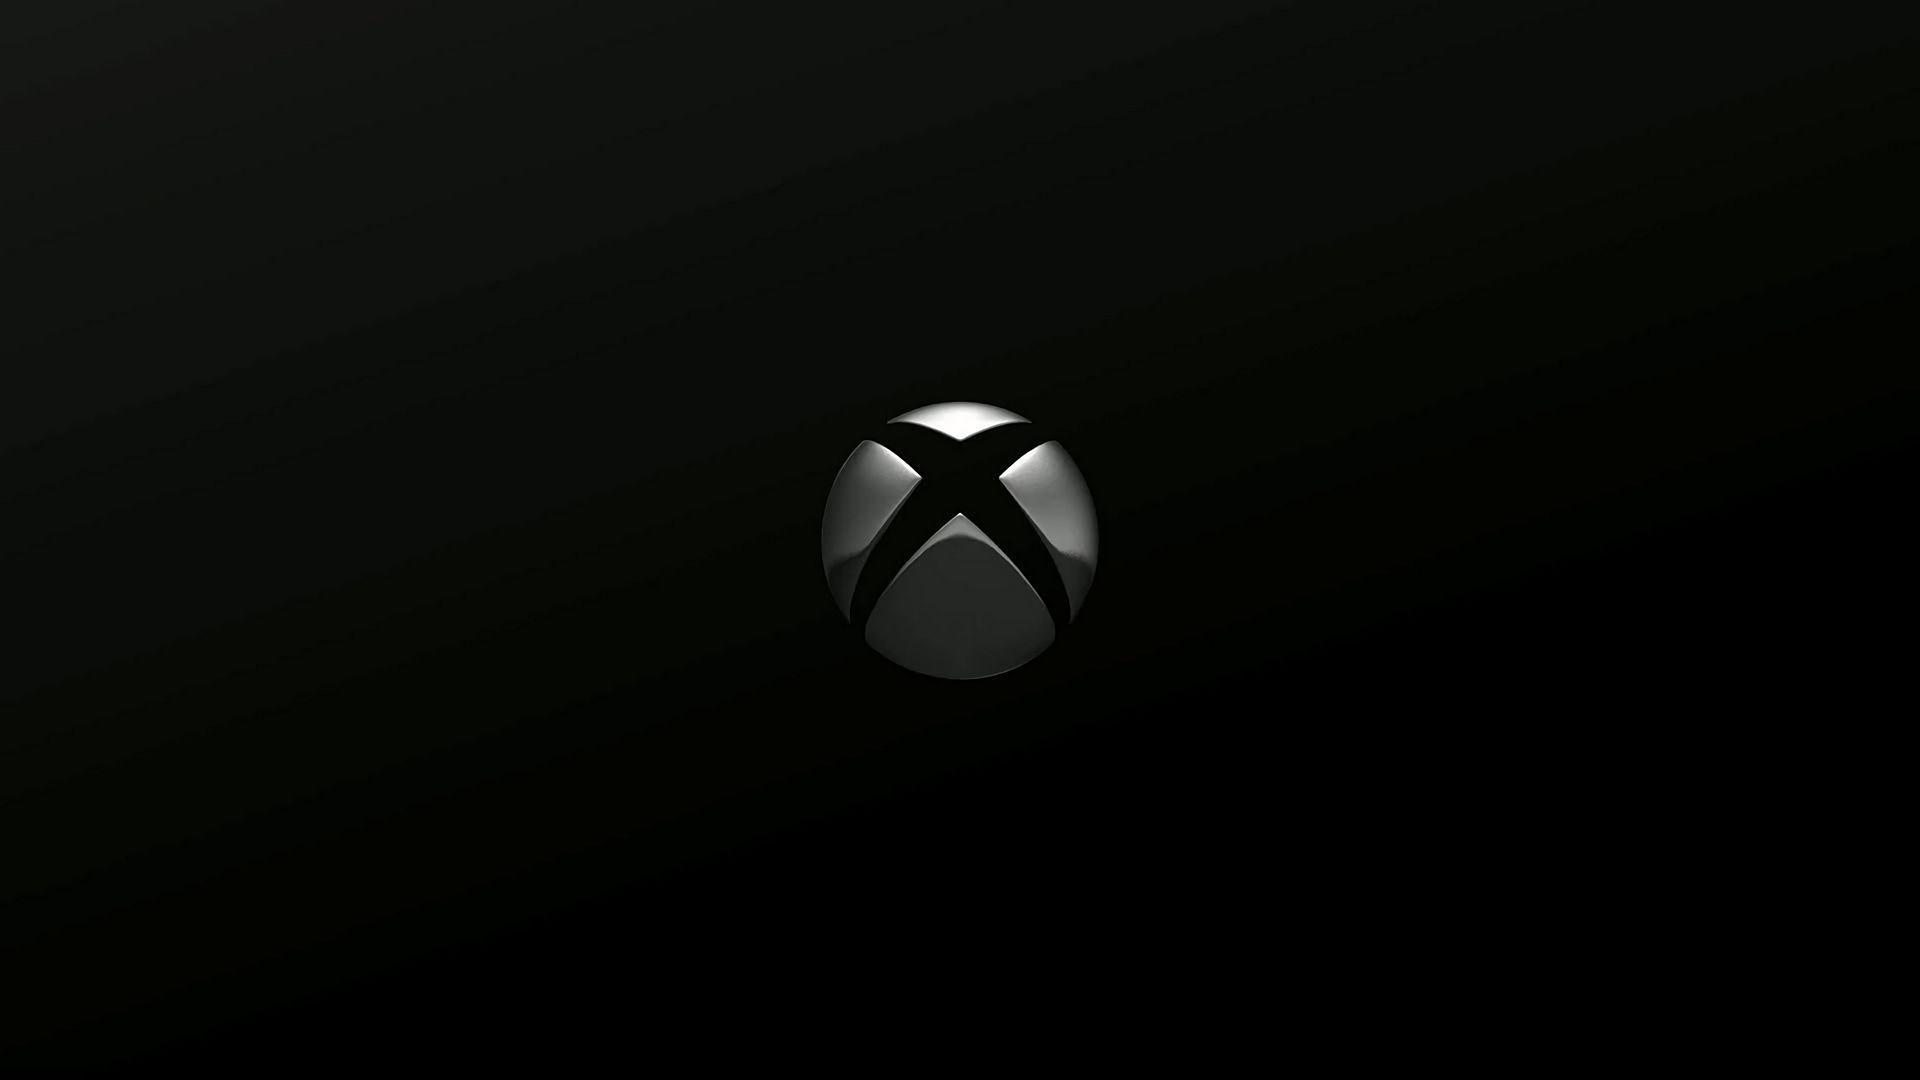 Wallpaper Xbox One. (45++ Wallpaper)